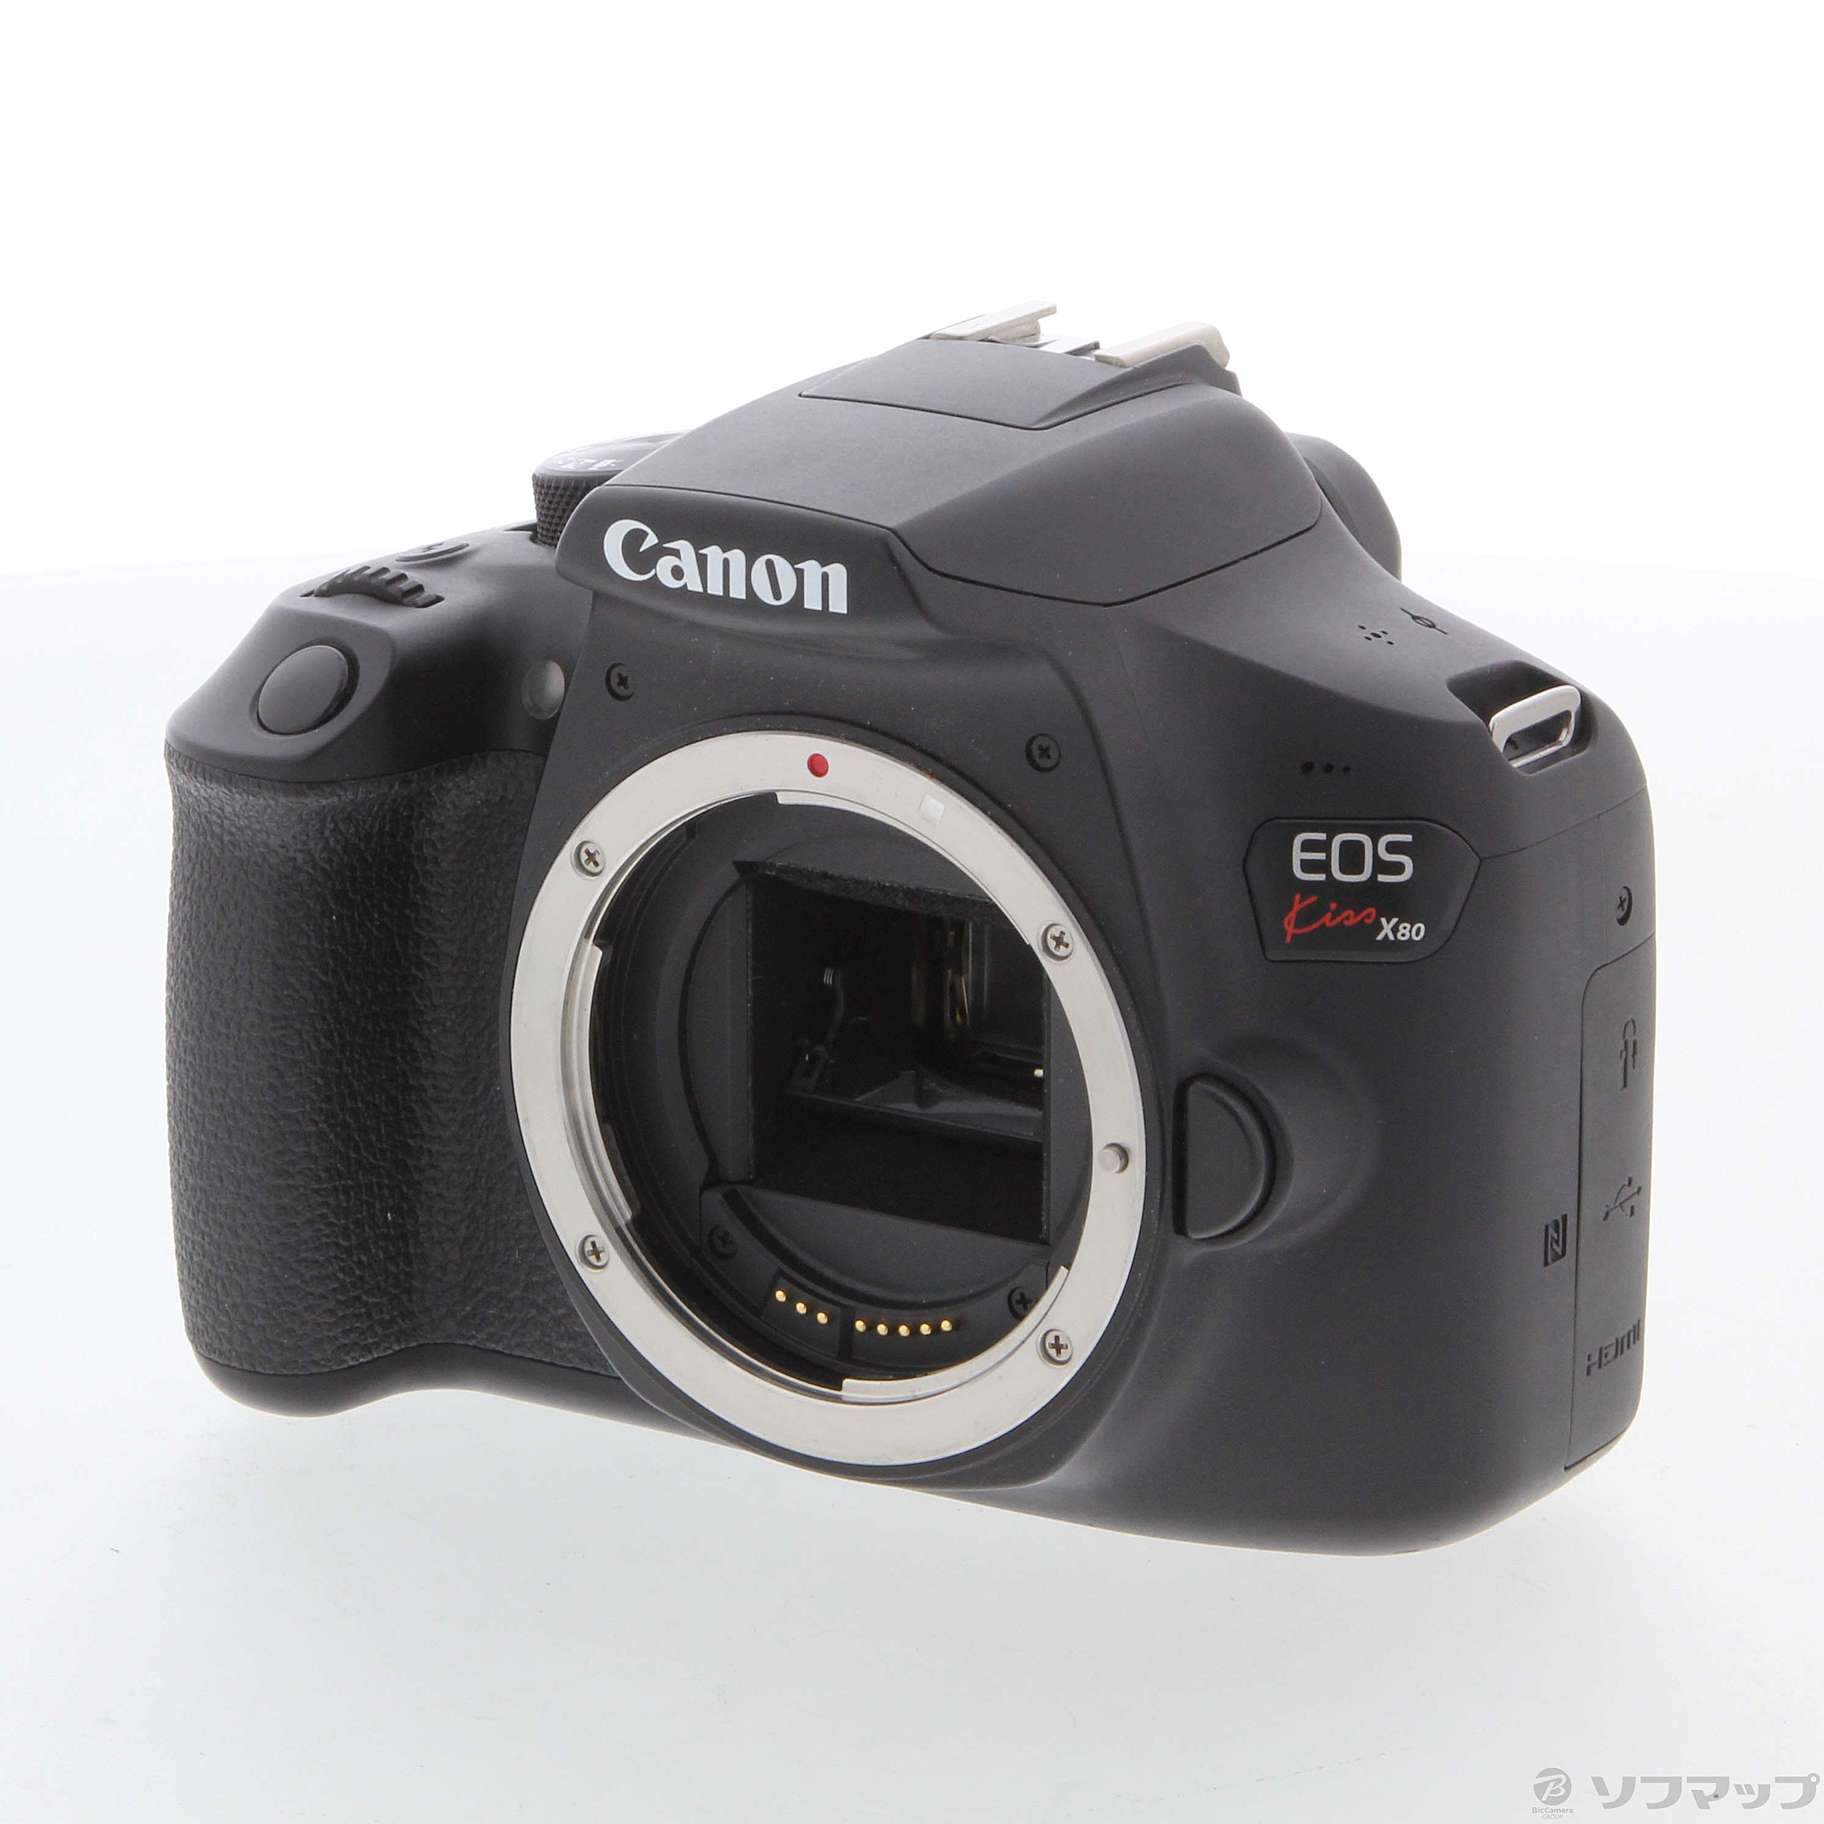 Canon Digital SLR Camera EOS Kiss X80キャノン - デジタルカメラ